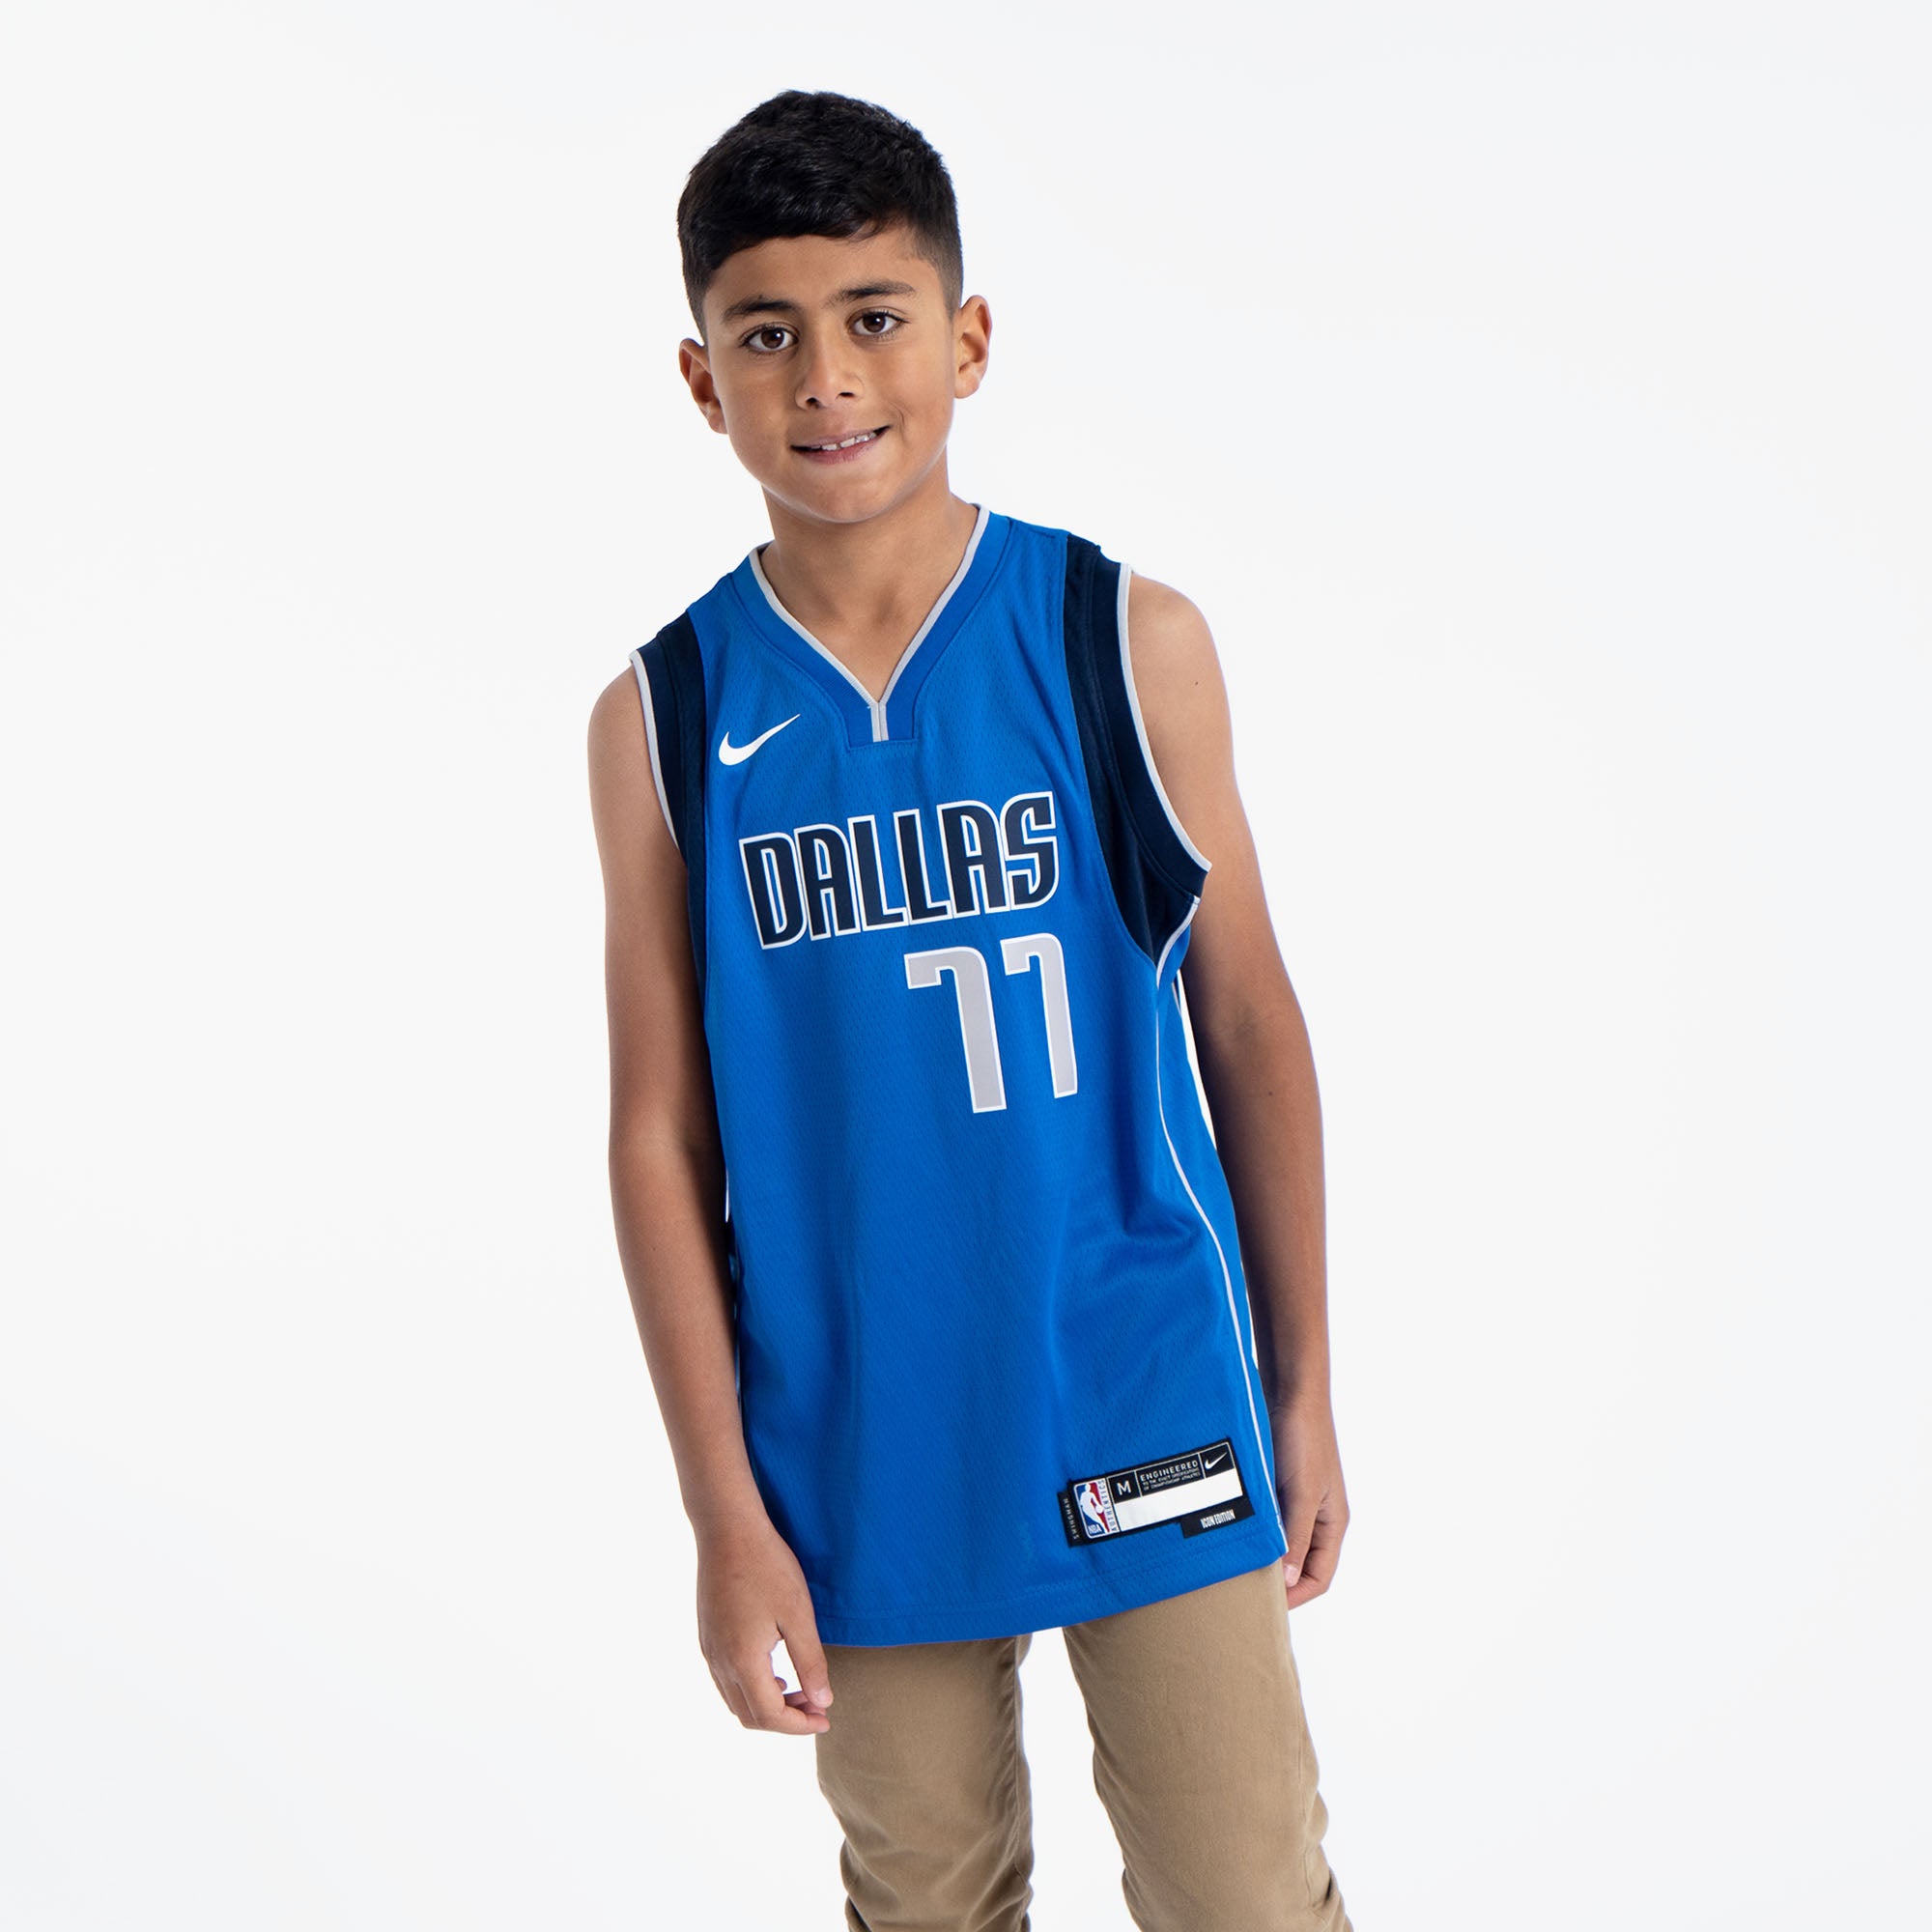 NBA Kids' Top - Blue